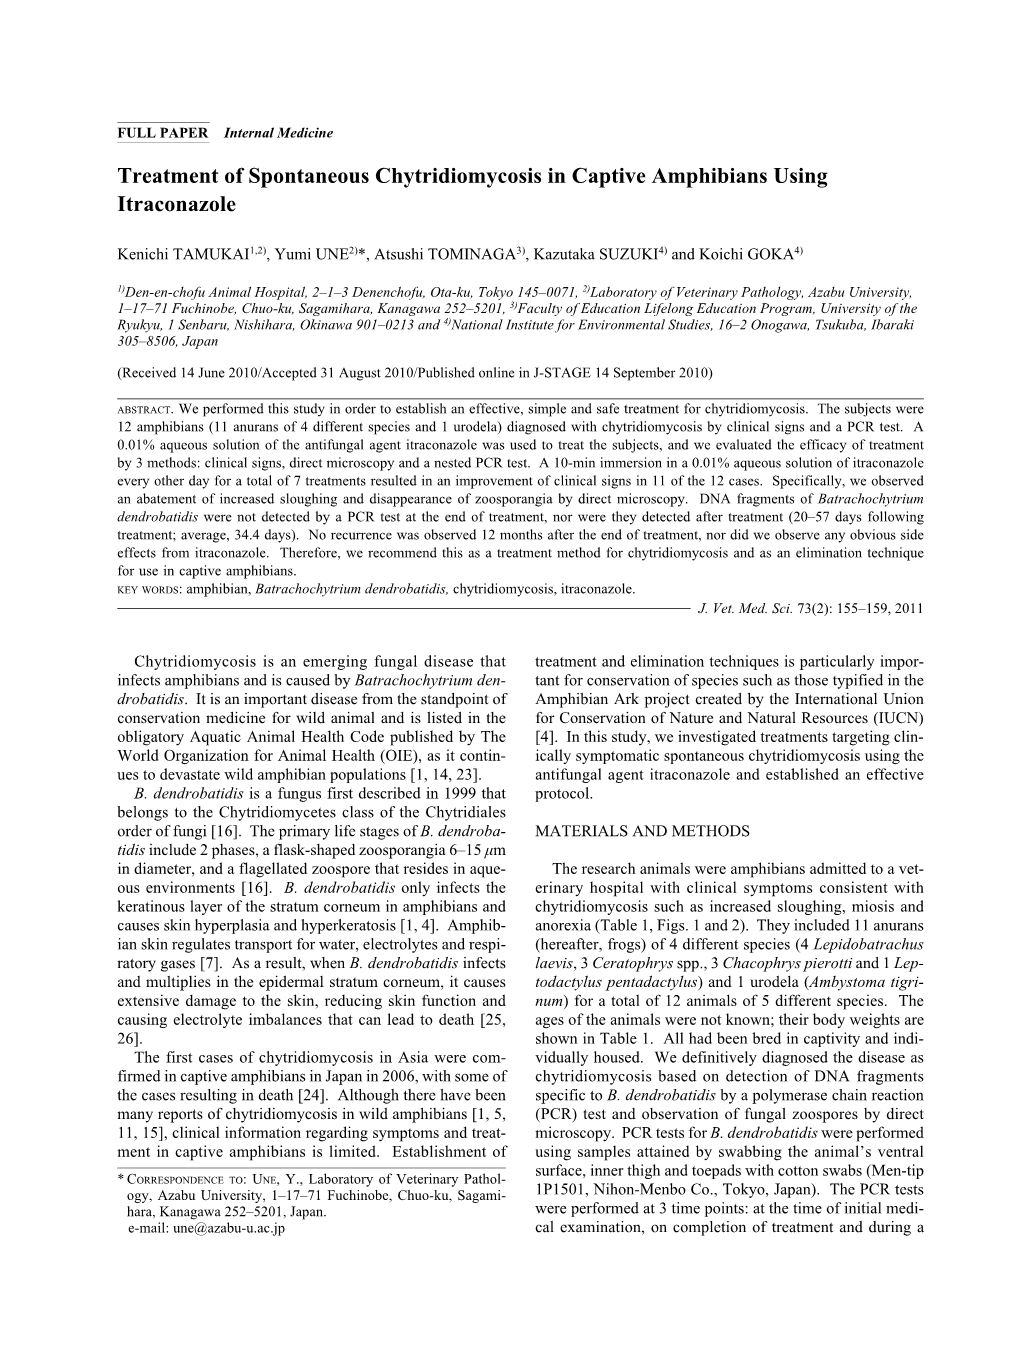 Treatment of Spontaneous Chytridiomycosis in Captive Amphibians Using Itraconazole